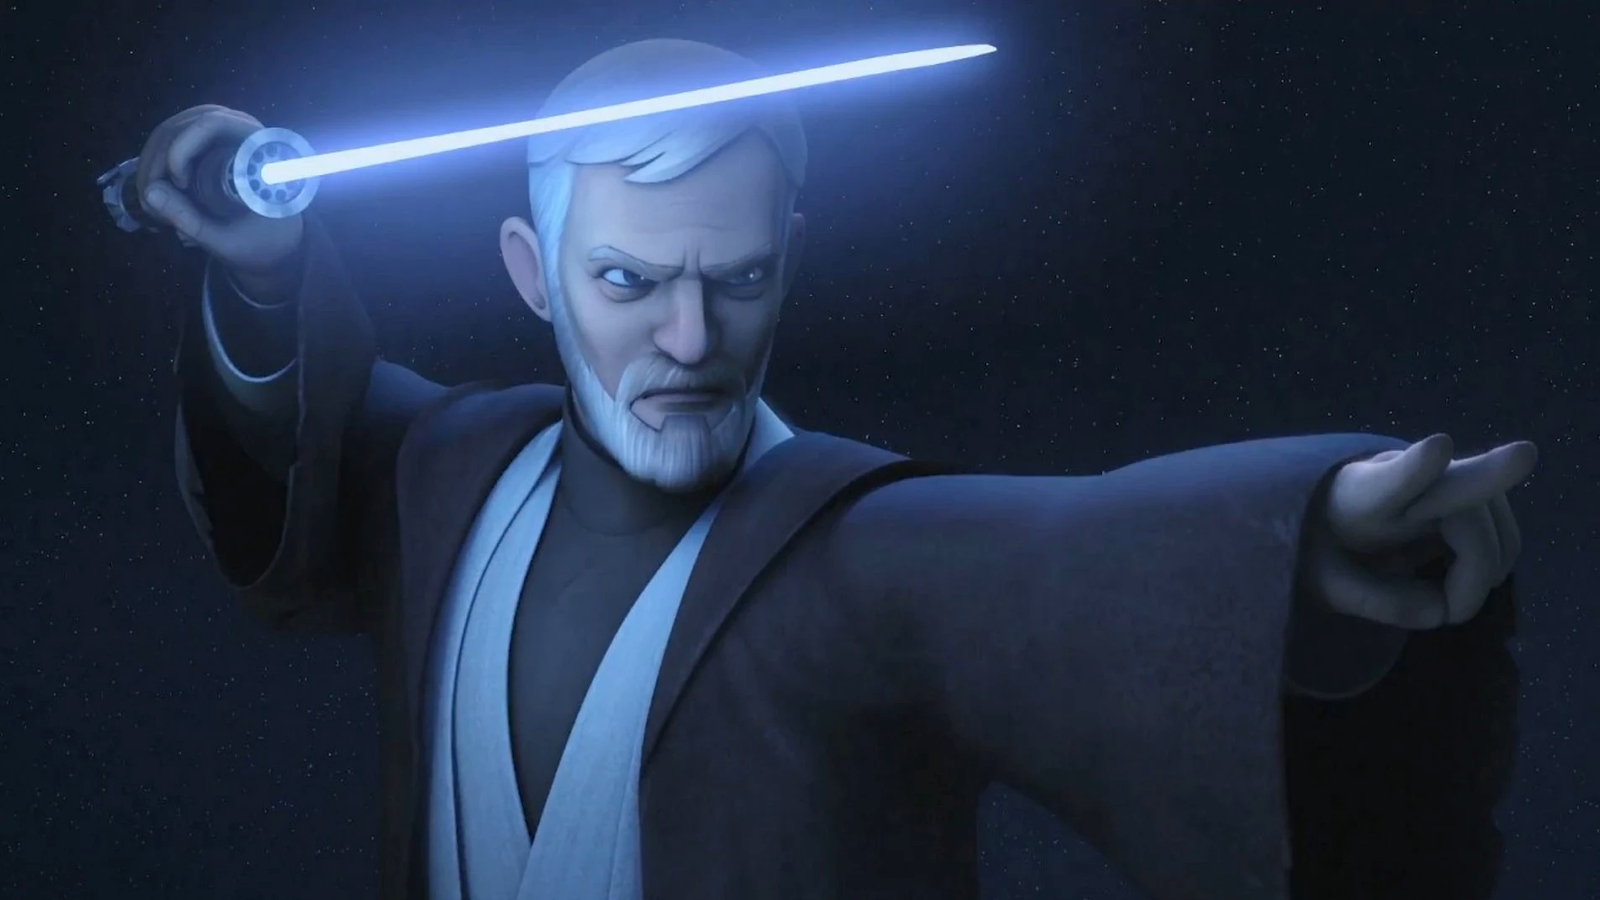 Obi-Wan Kenobi poses with his lightsaber in Star Wars Rebels Season 3, Episode 20, "Twin Suns"